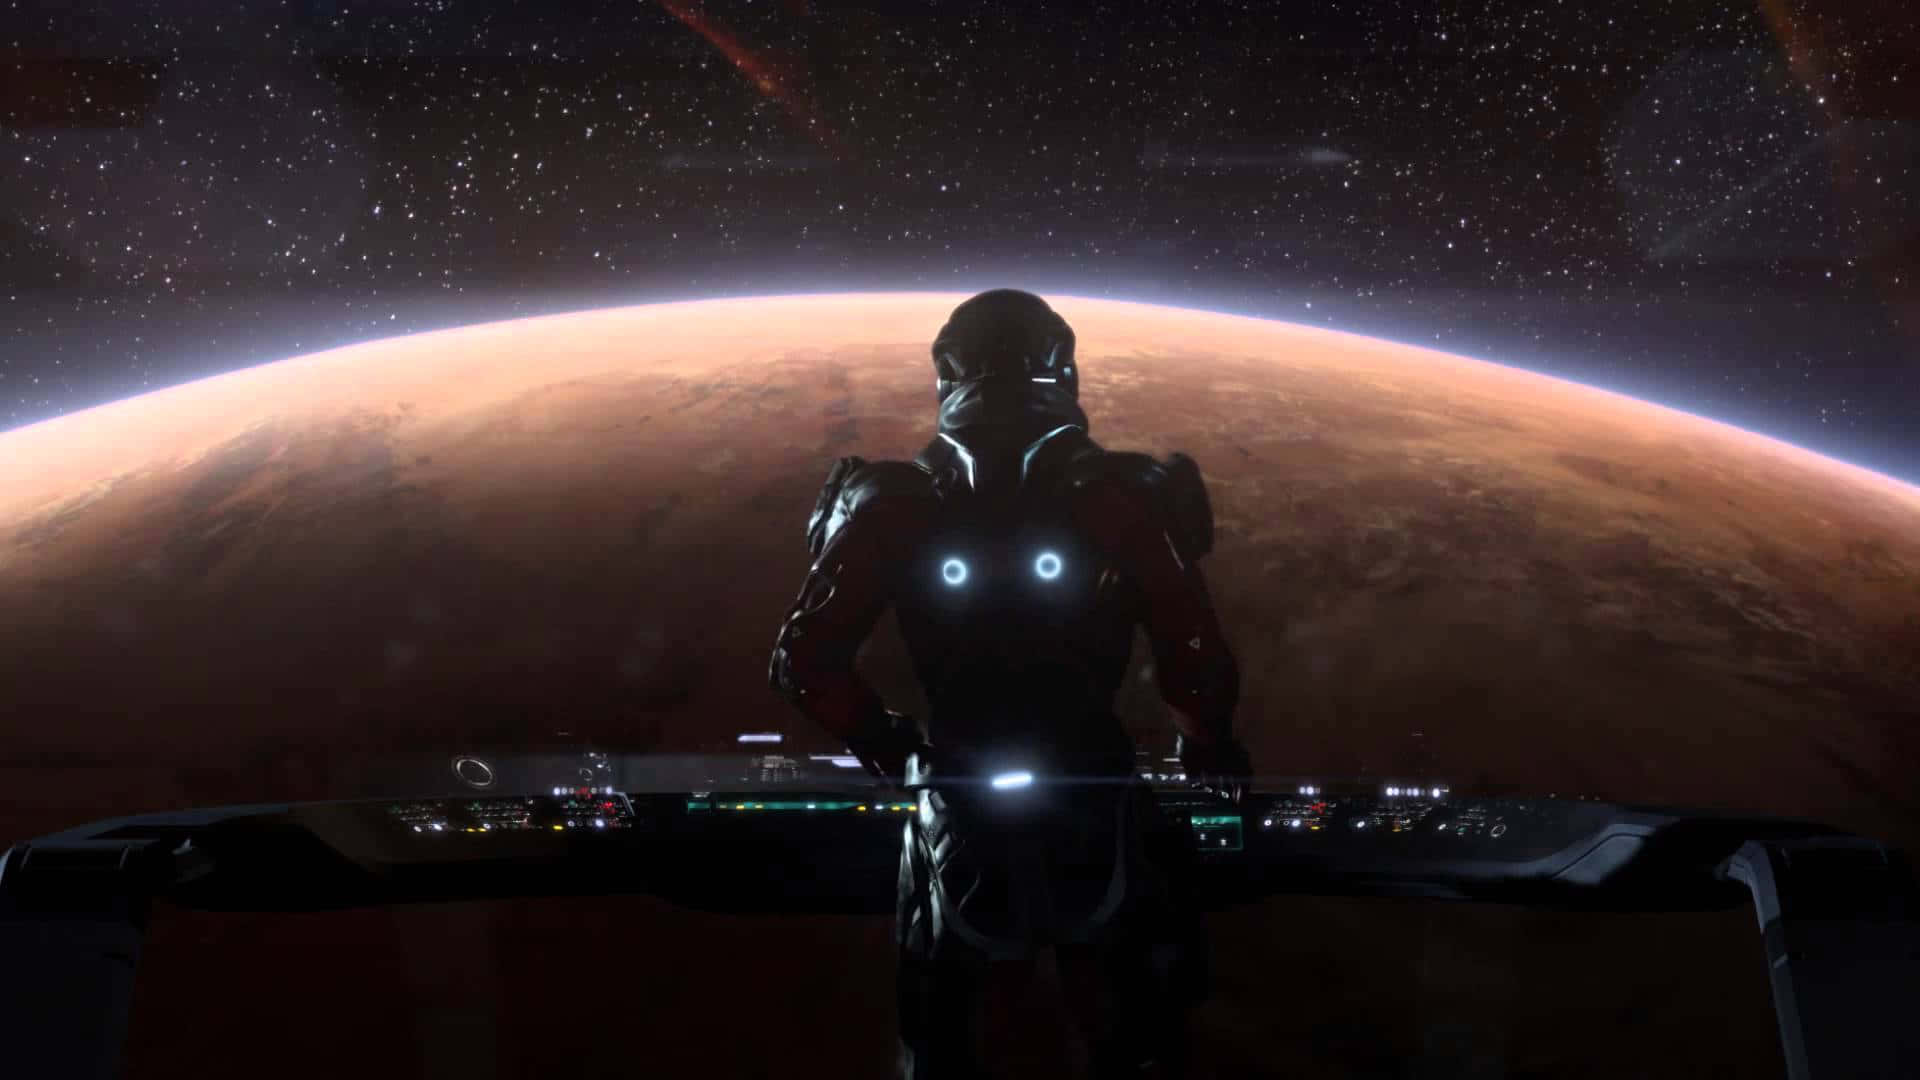 Mass Effect Andromeda - Intergalactic Adventure Awaits Wallpaper